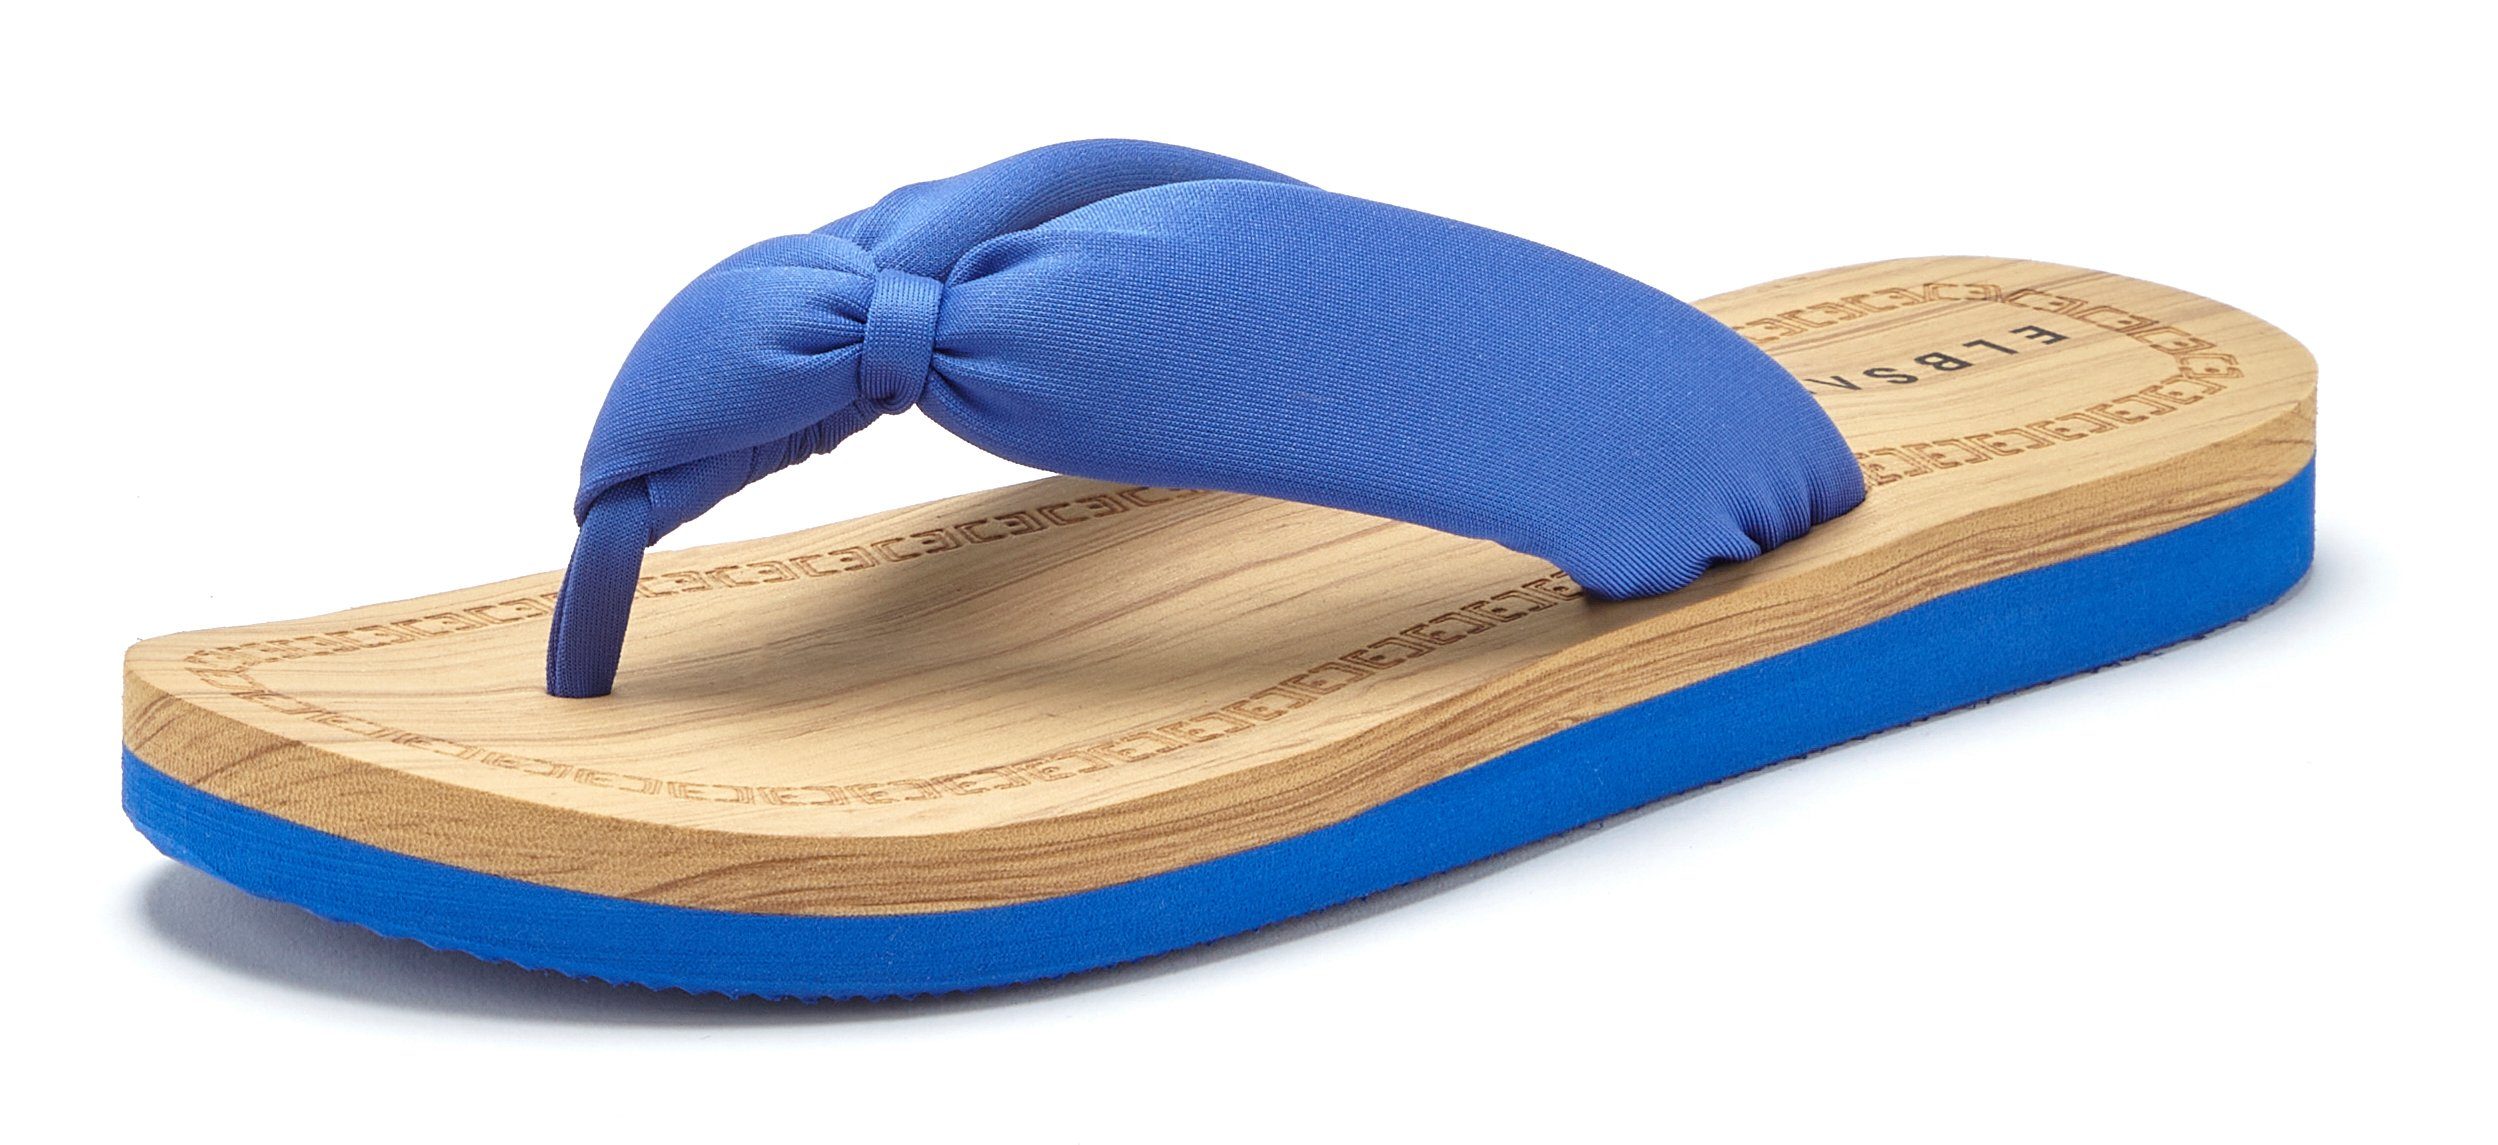 Elbsand Badezehentrenner Sandale, VEGAN Badeschuh ultraleicht blau Pantolette